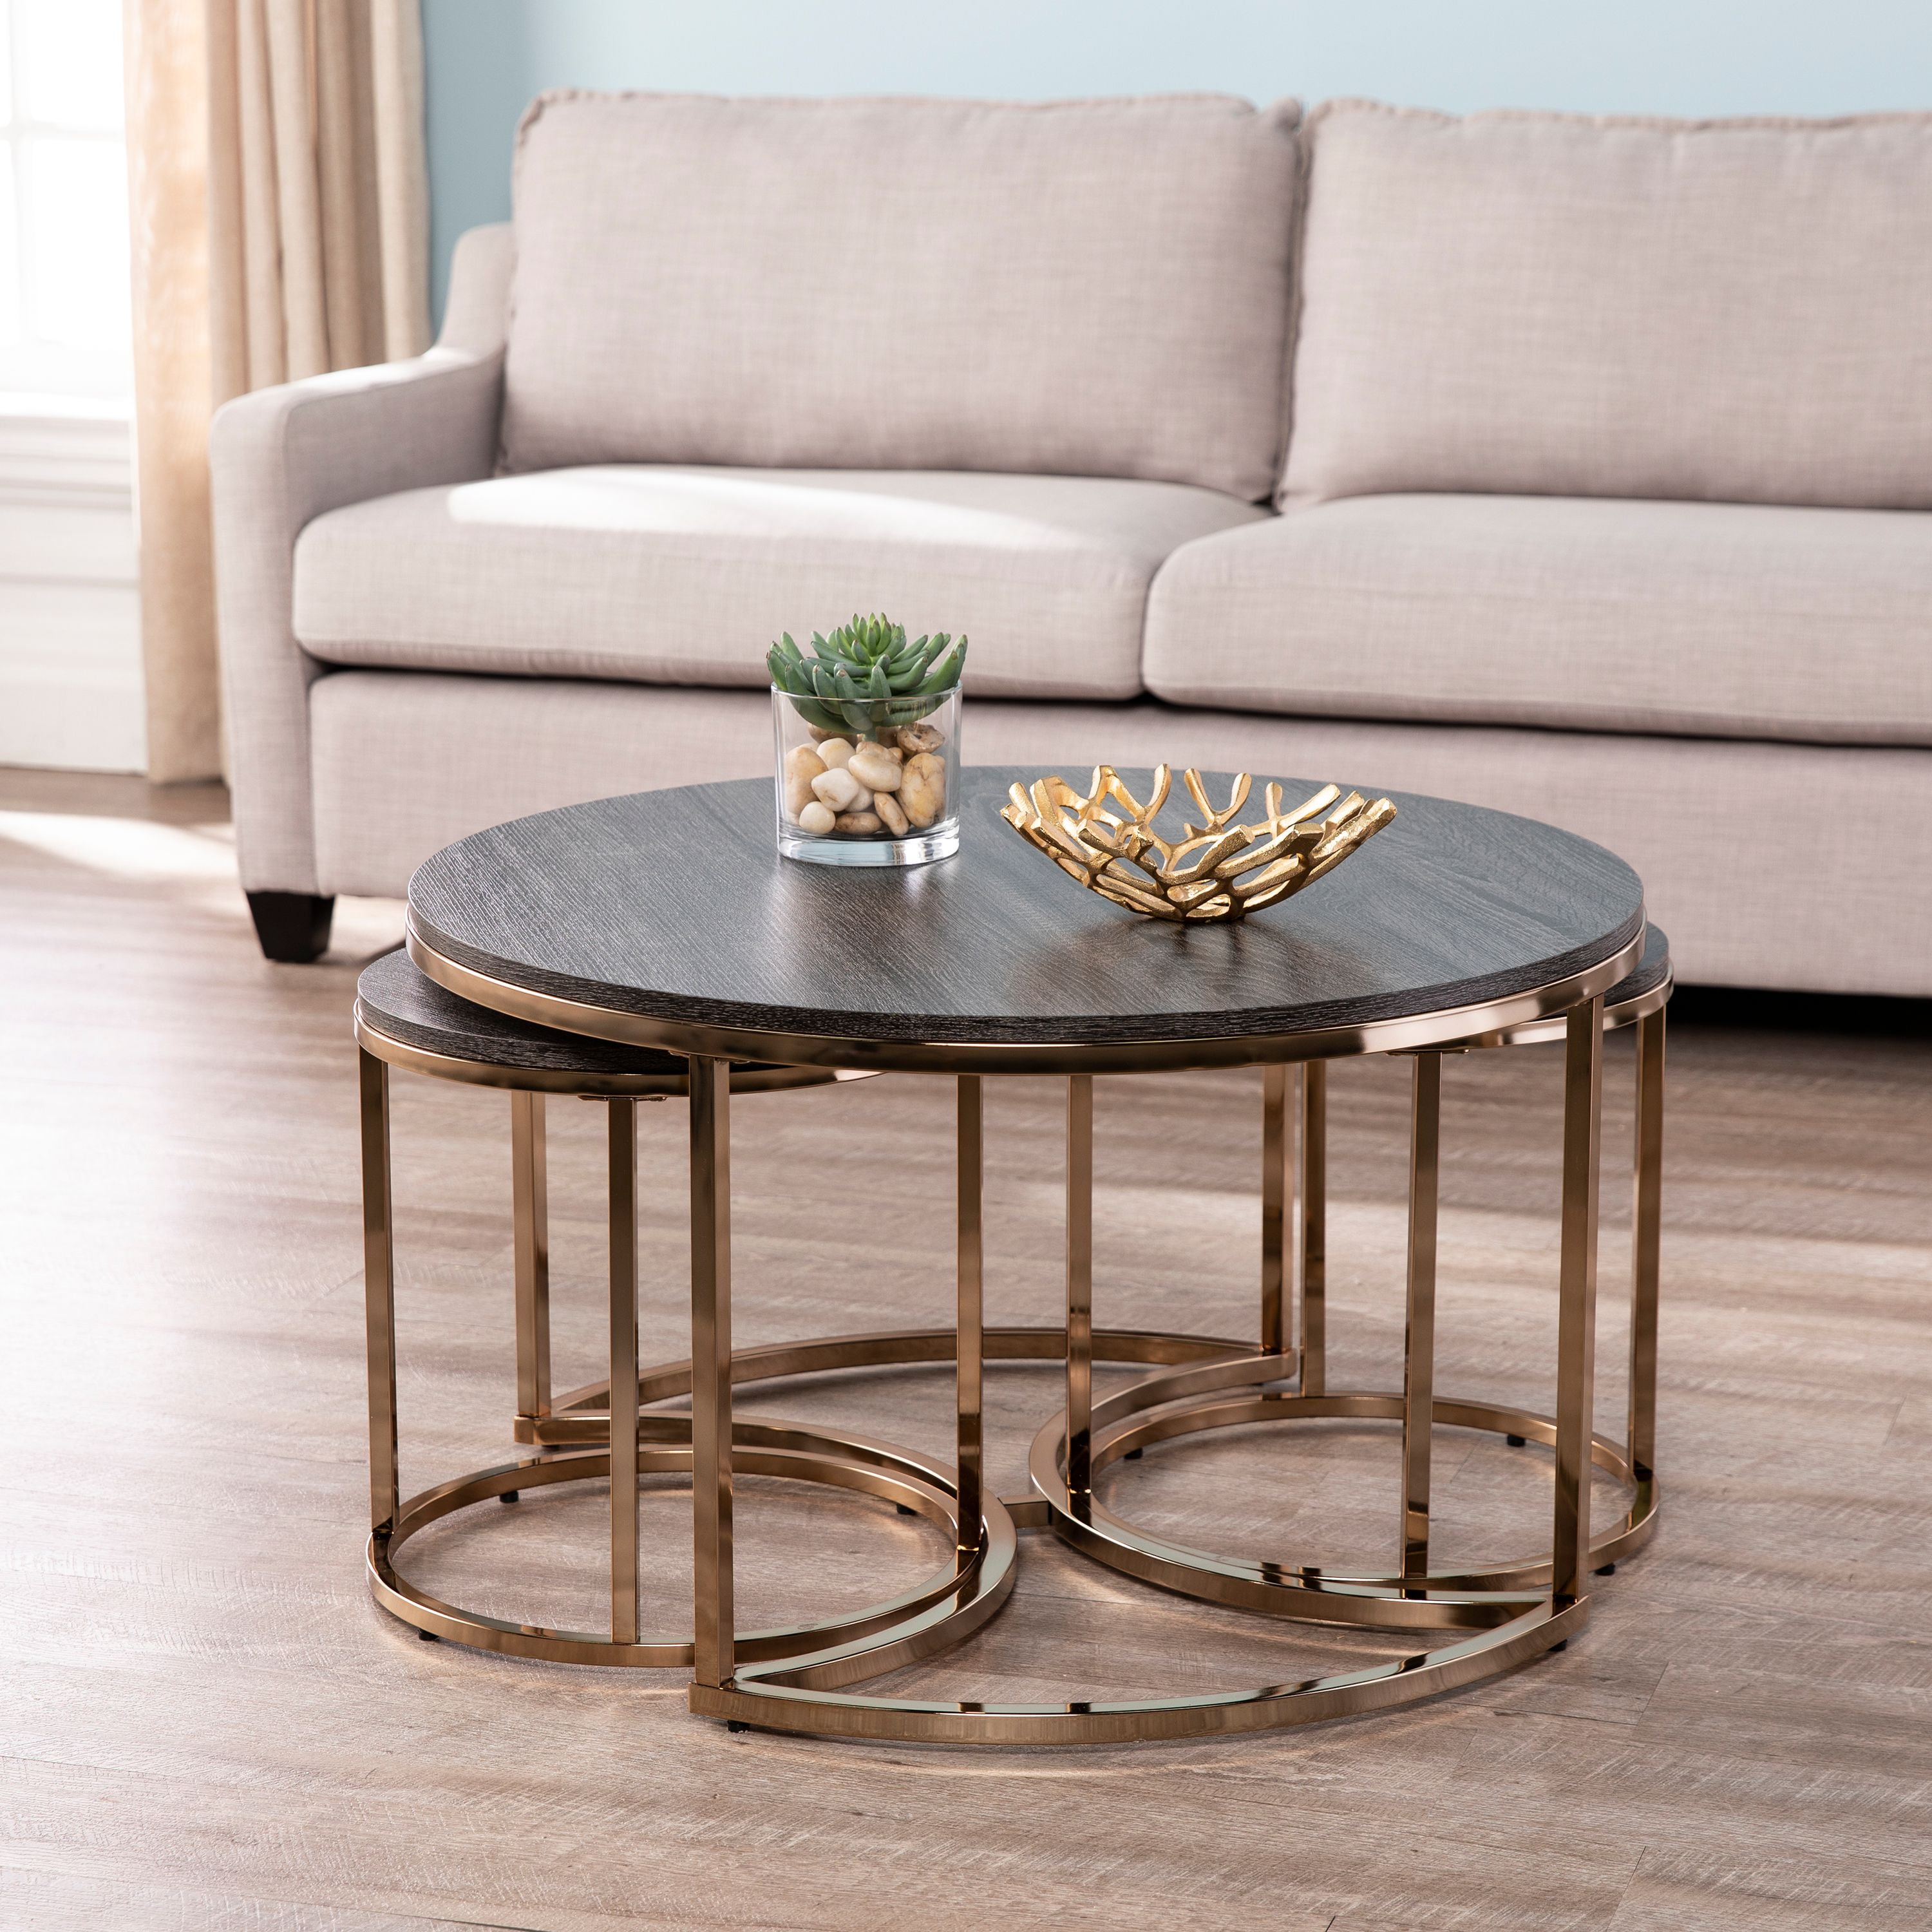 lokyle round nesting coffee tables - 3pc set, glam